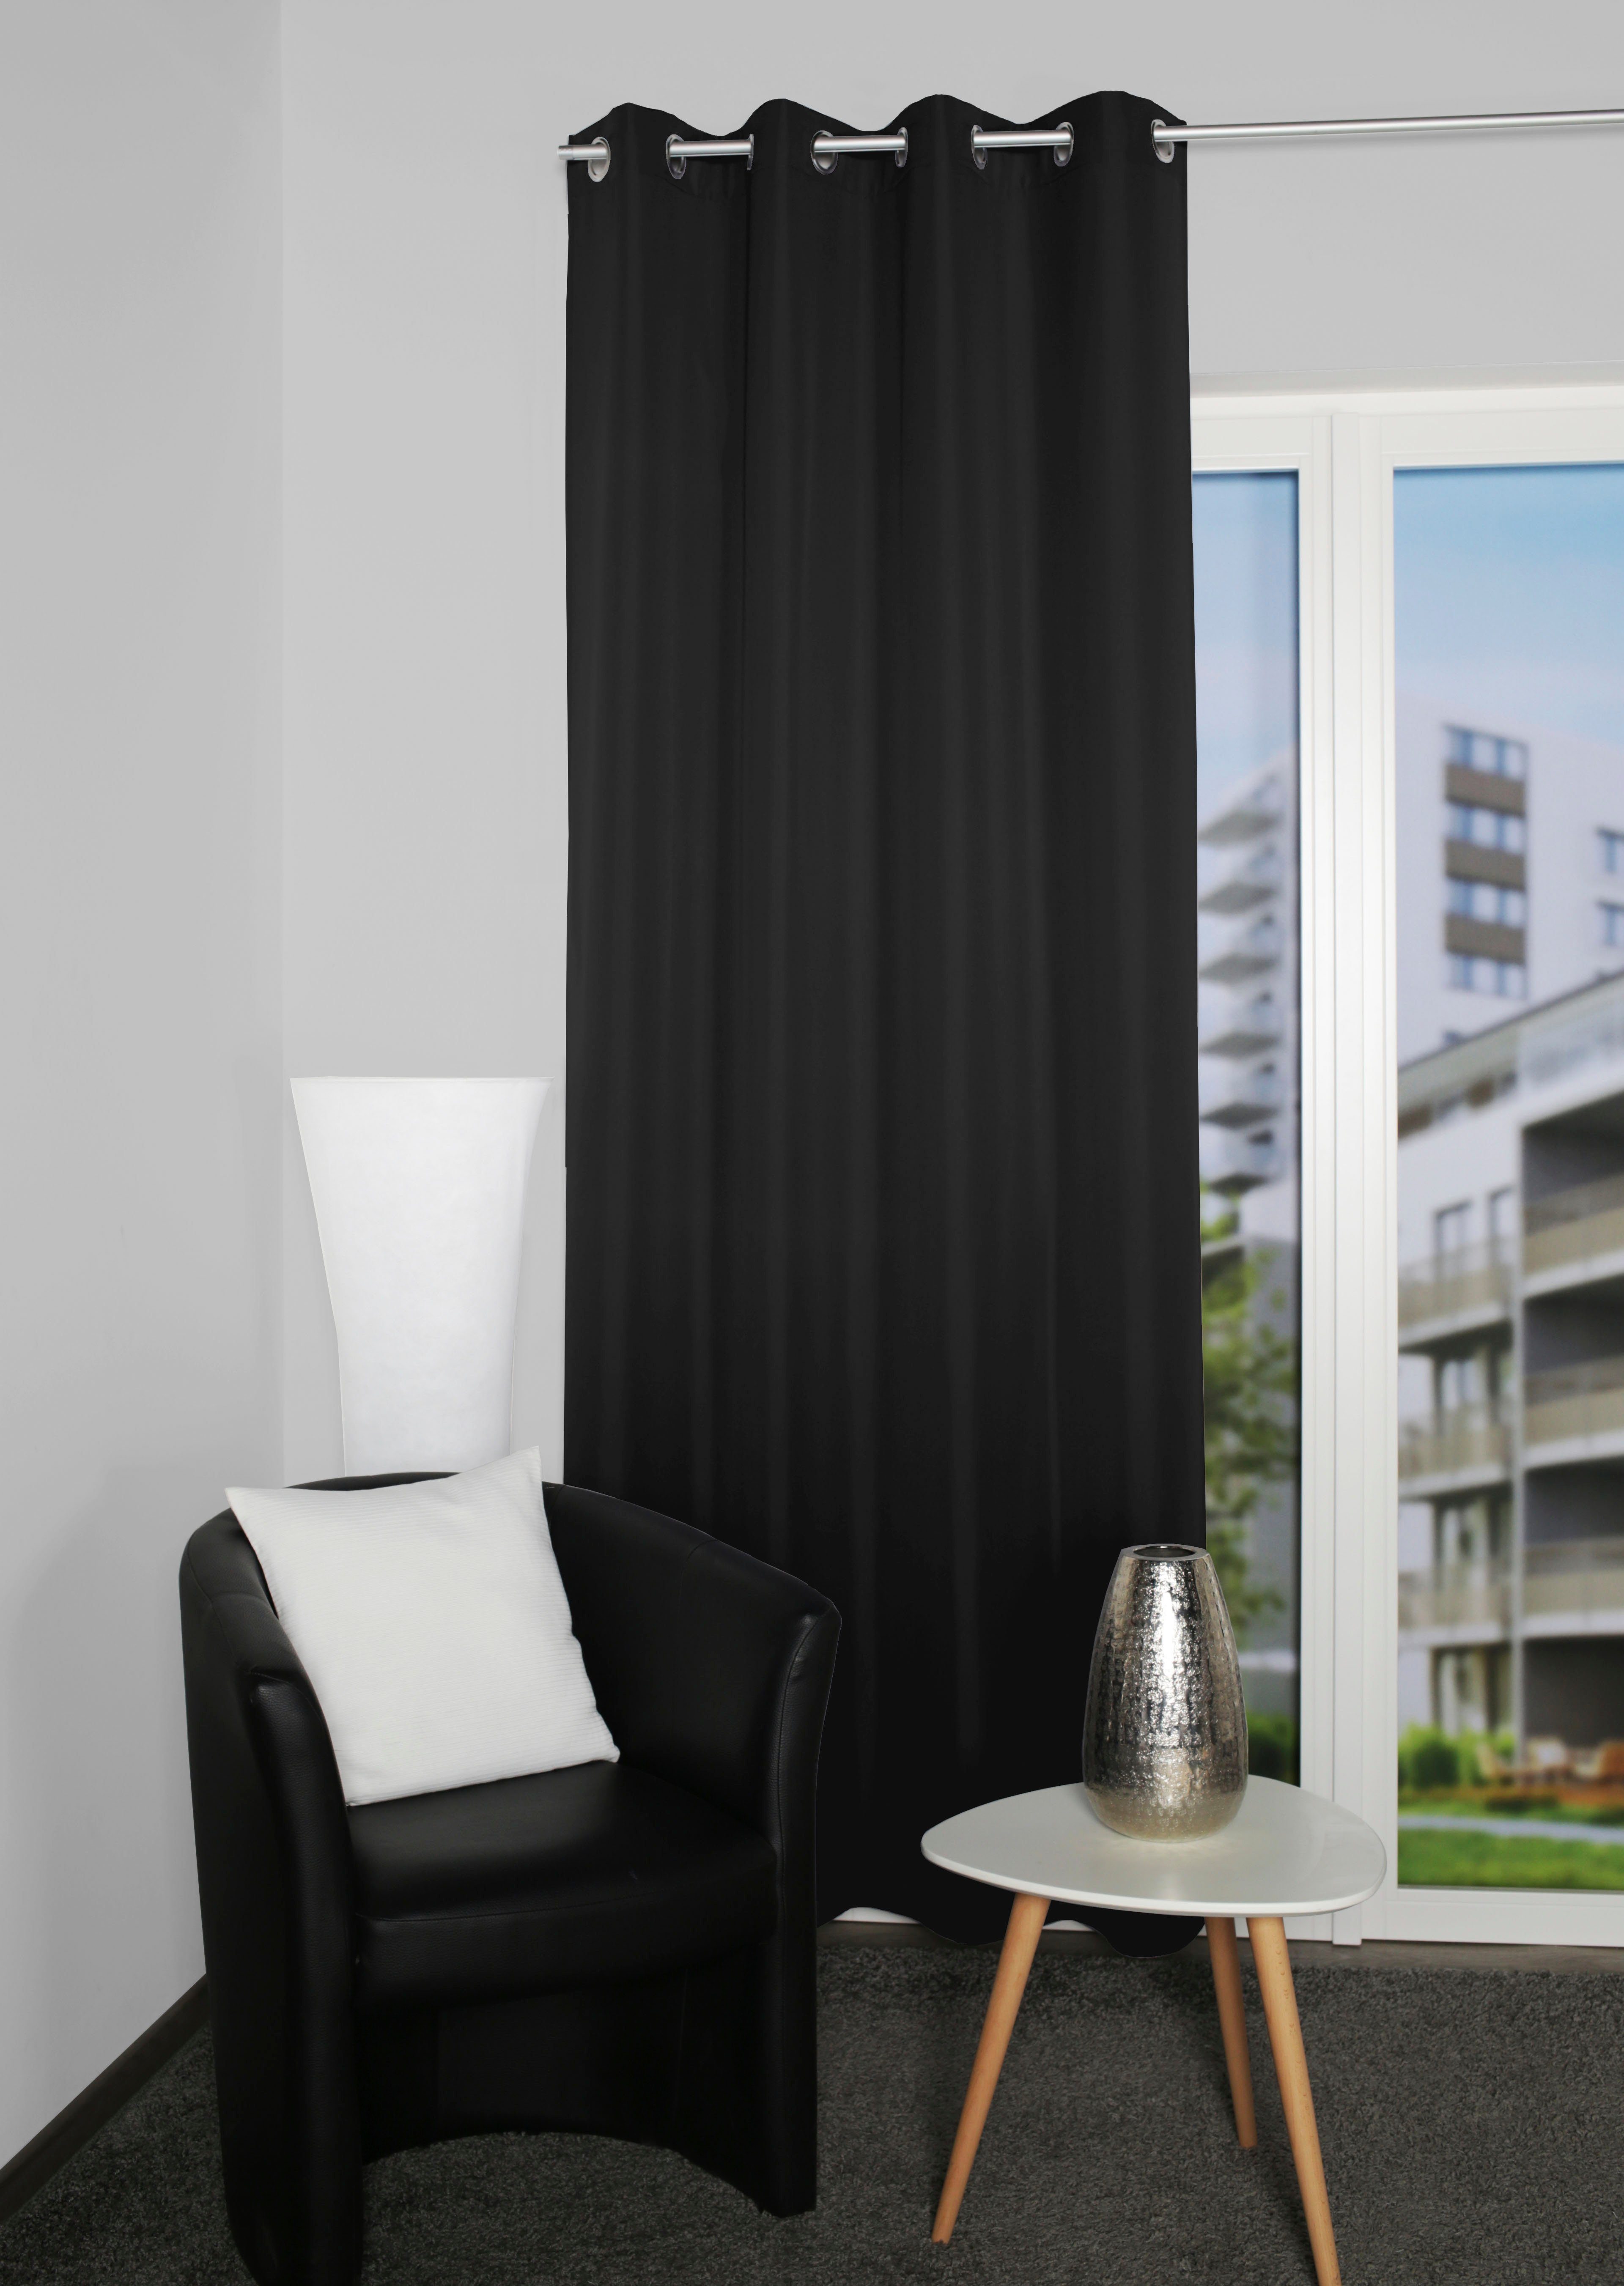 Clever-Kauf-24 Vorhang (1 schwarz Ösenschal St), ATLANTIK, Ösen Uni Home ATLANTIK Basics, blickdicht